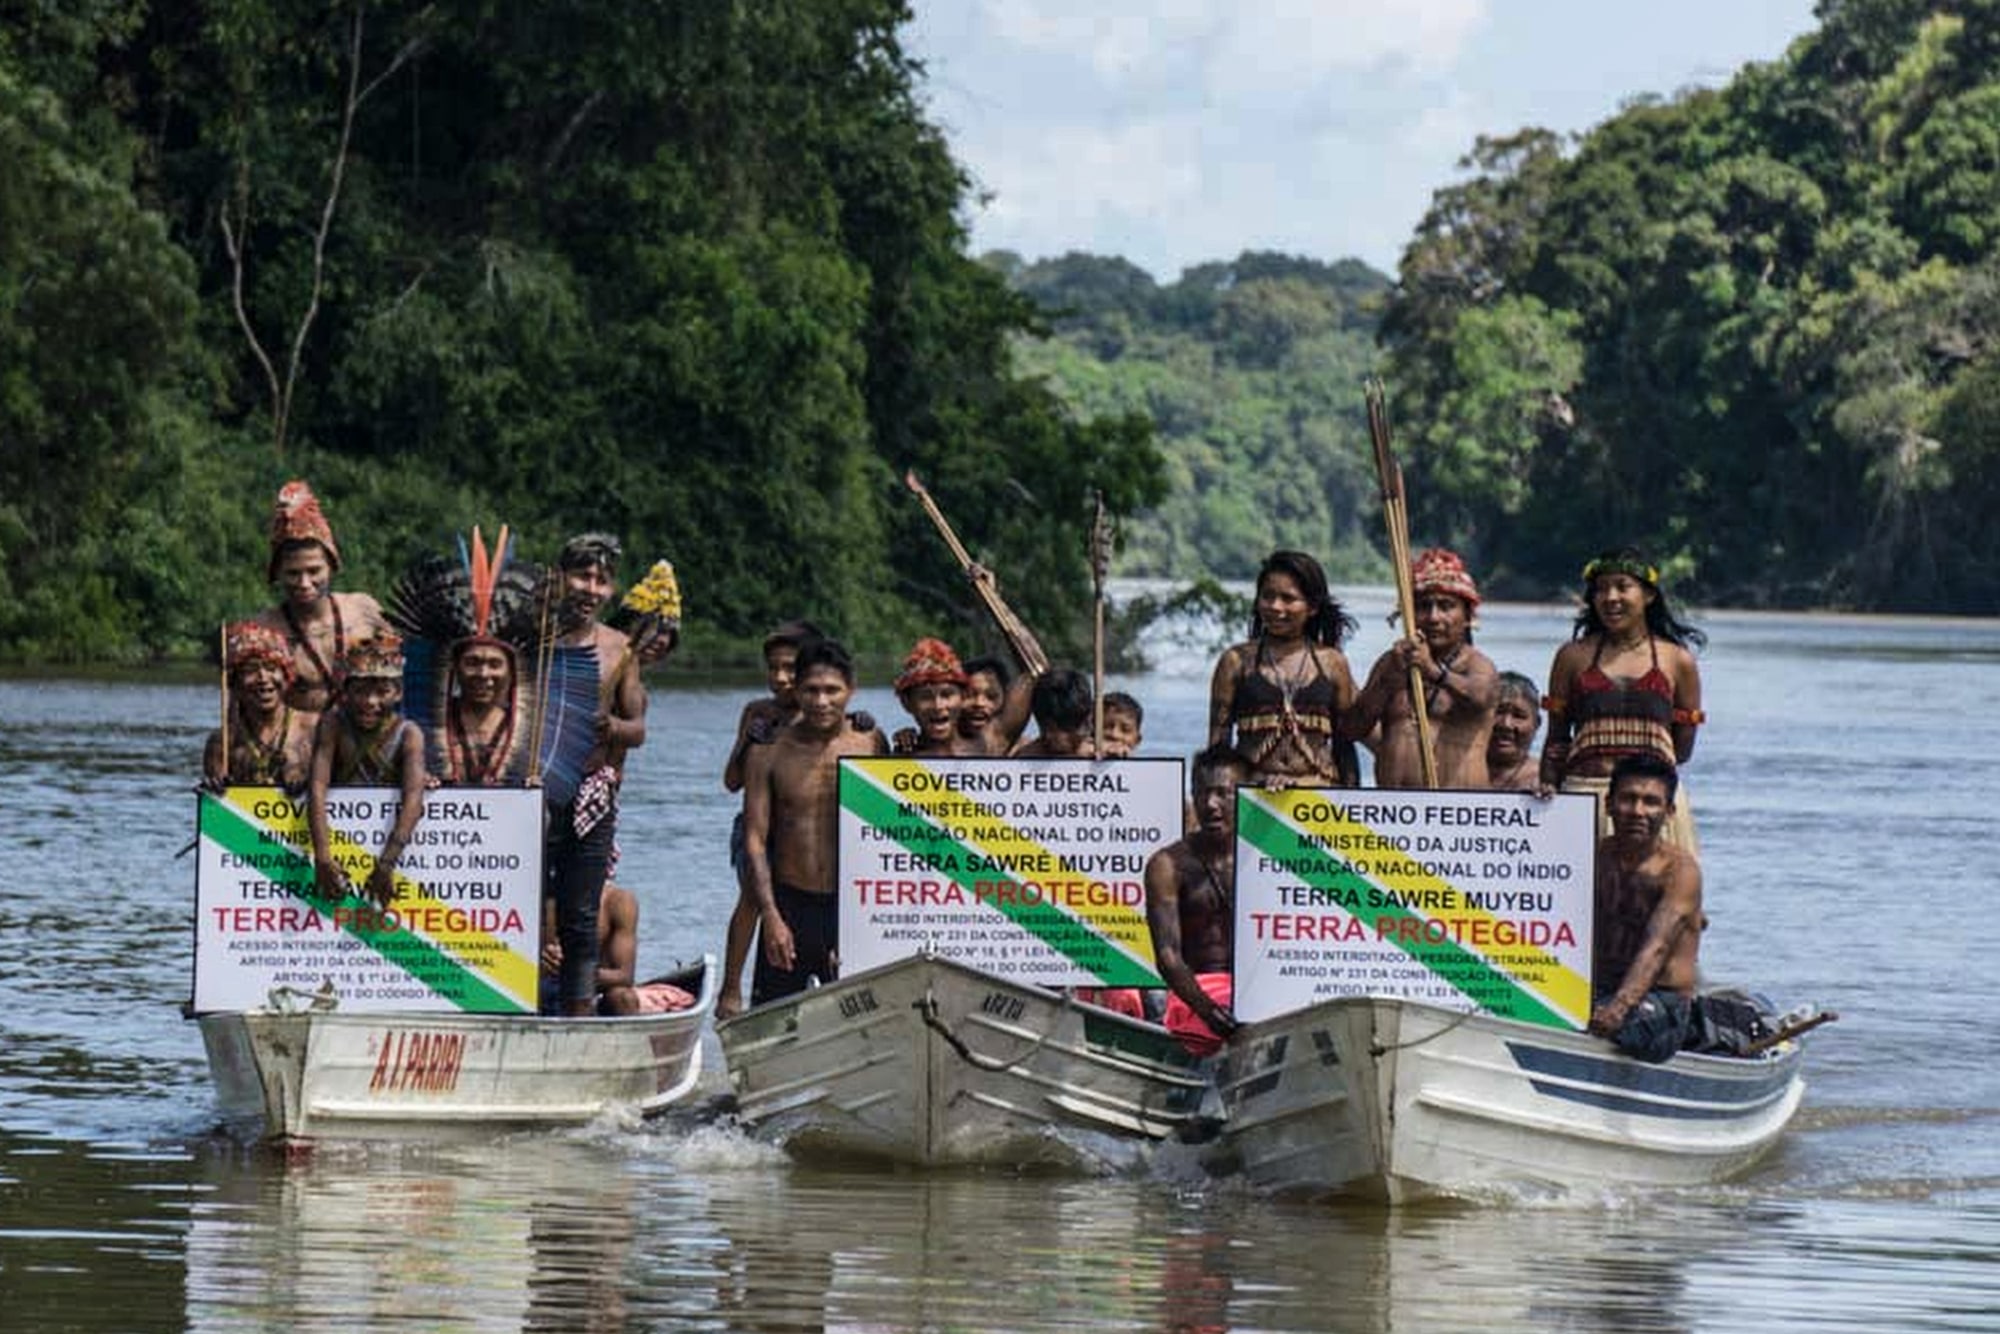 Rogério Assis, Munduruku1